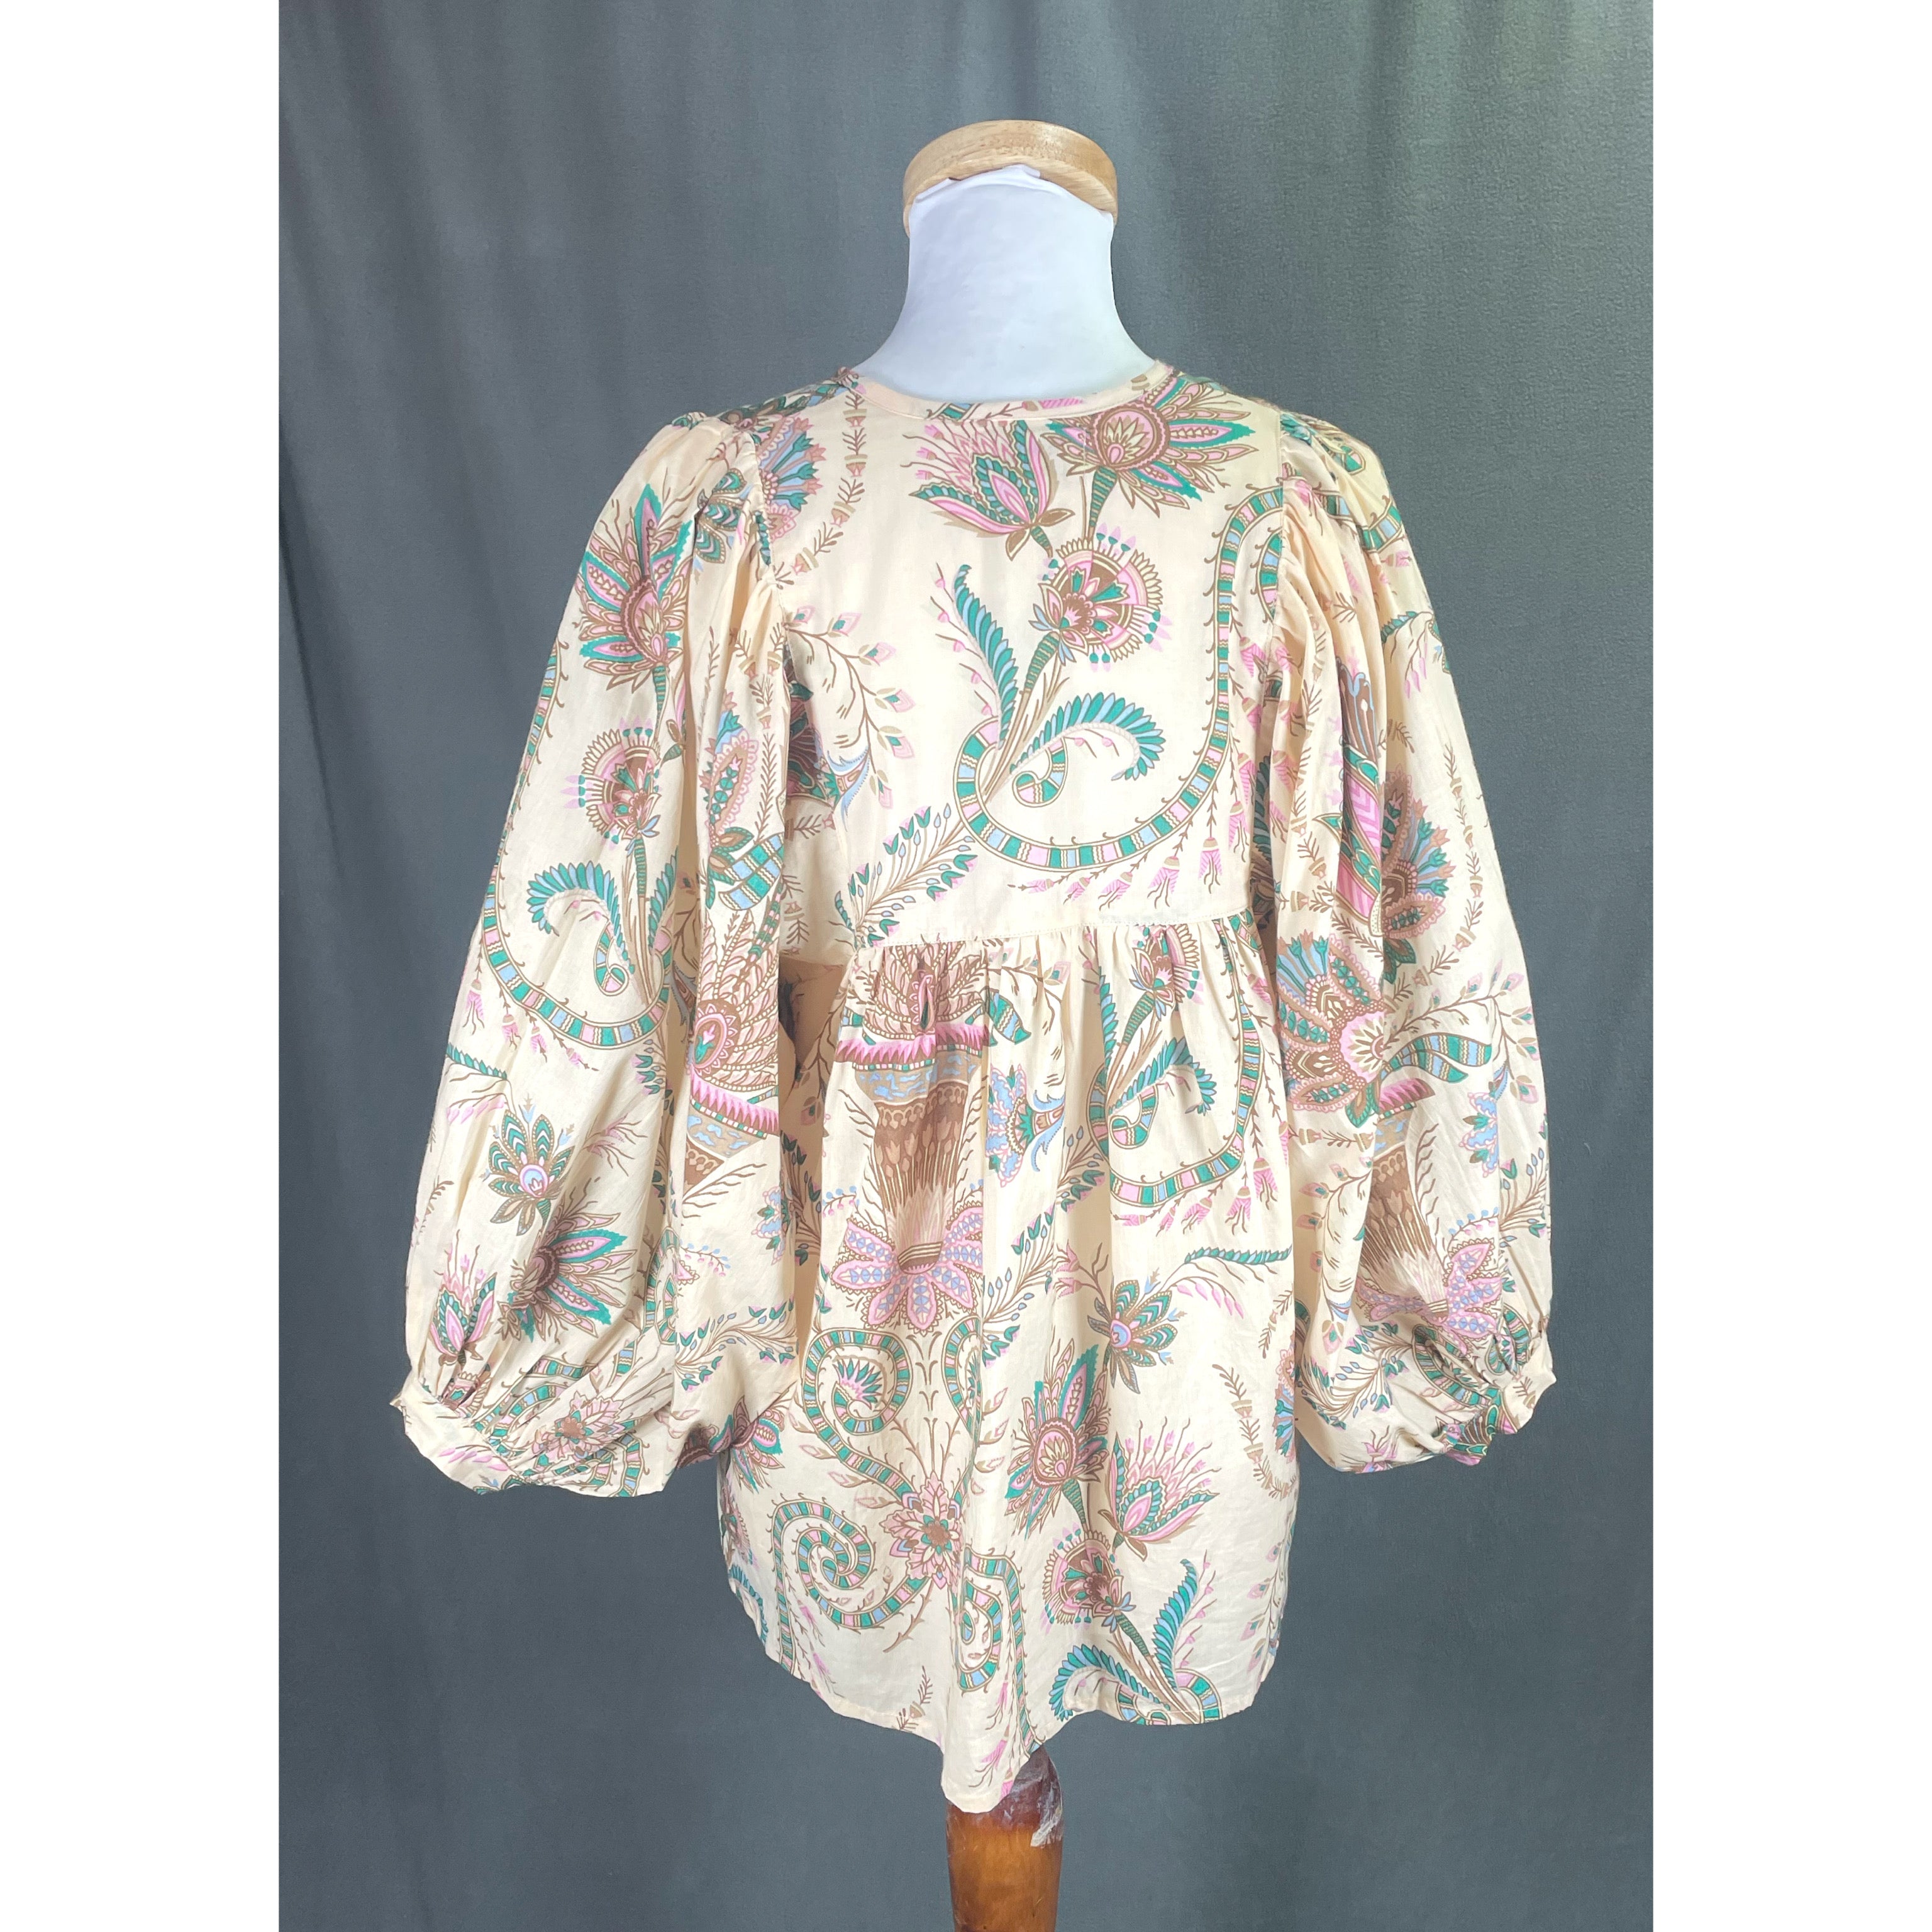 Mille blush floral blouse, size XS (runs large)